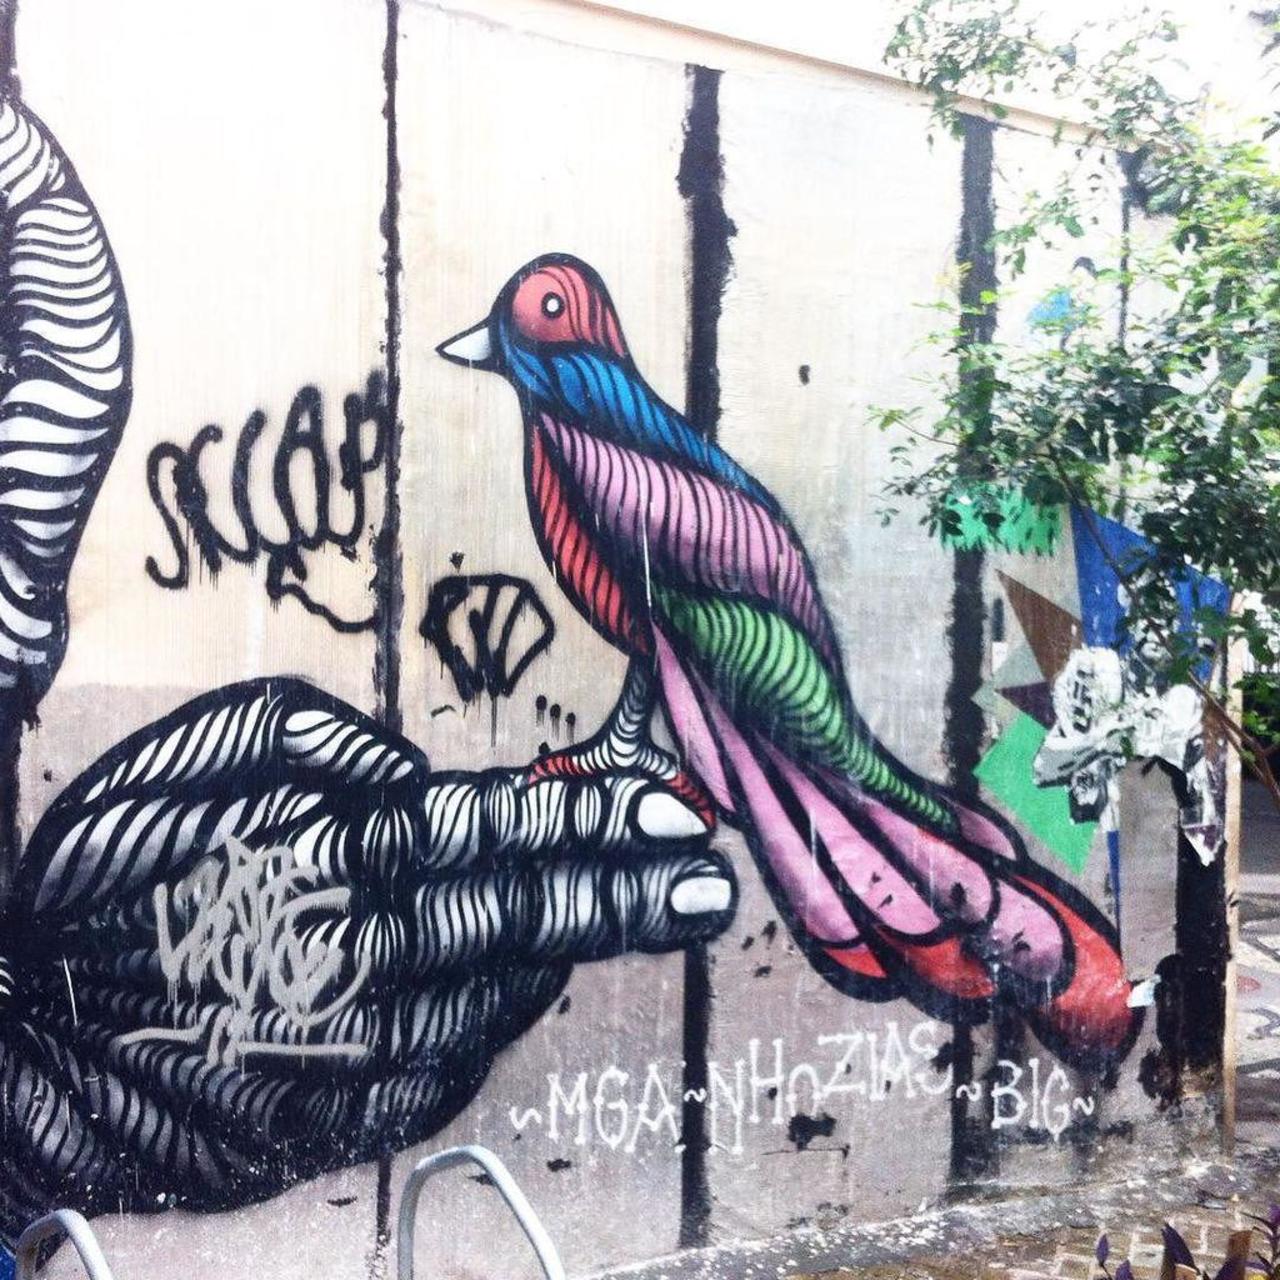 #arte #streetart #StreetArtRio #graffiti #bird #sonhos #art #instagraffiti #rj #riodejaneiro #wall #pels by danielp… http://t.co/5dP3NVL33I